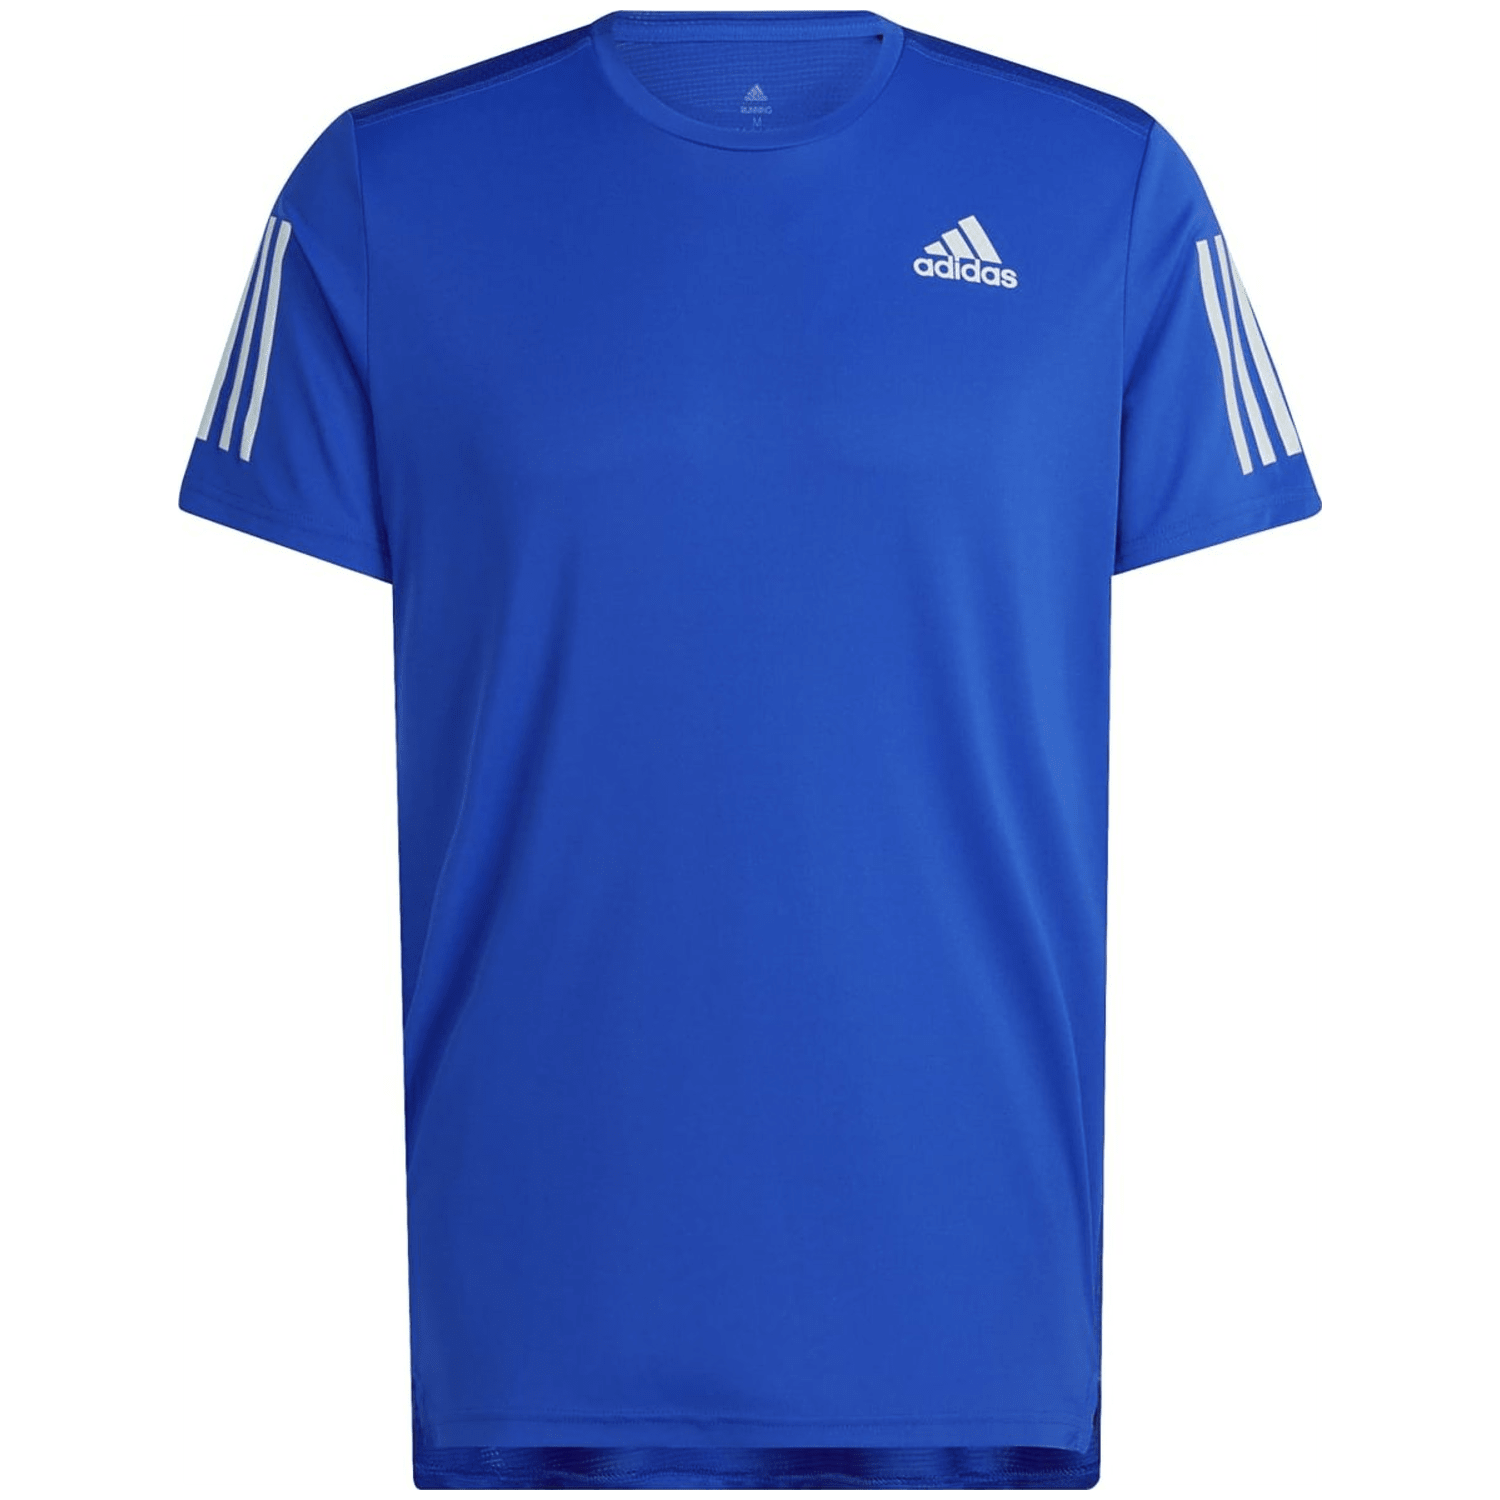 Adidas Own the Run T-Shirt Herren